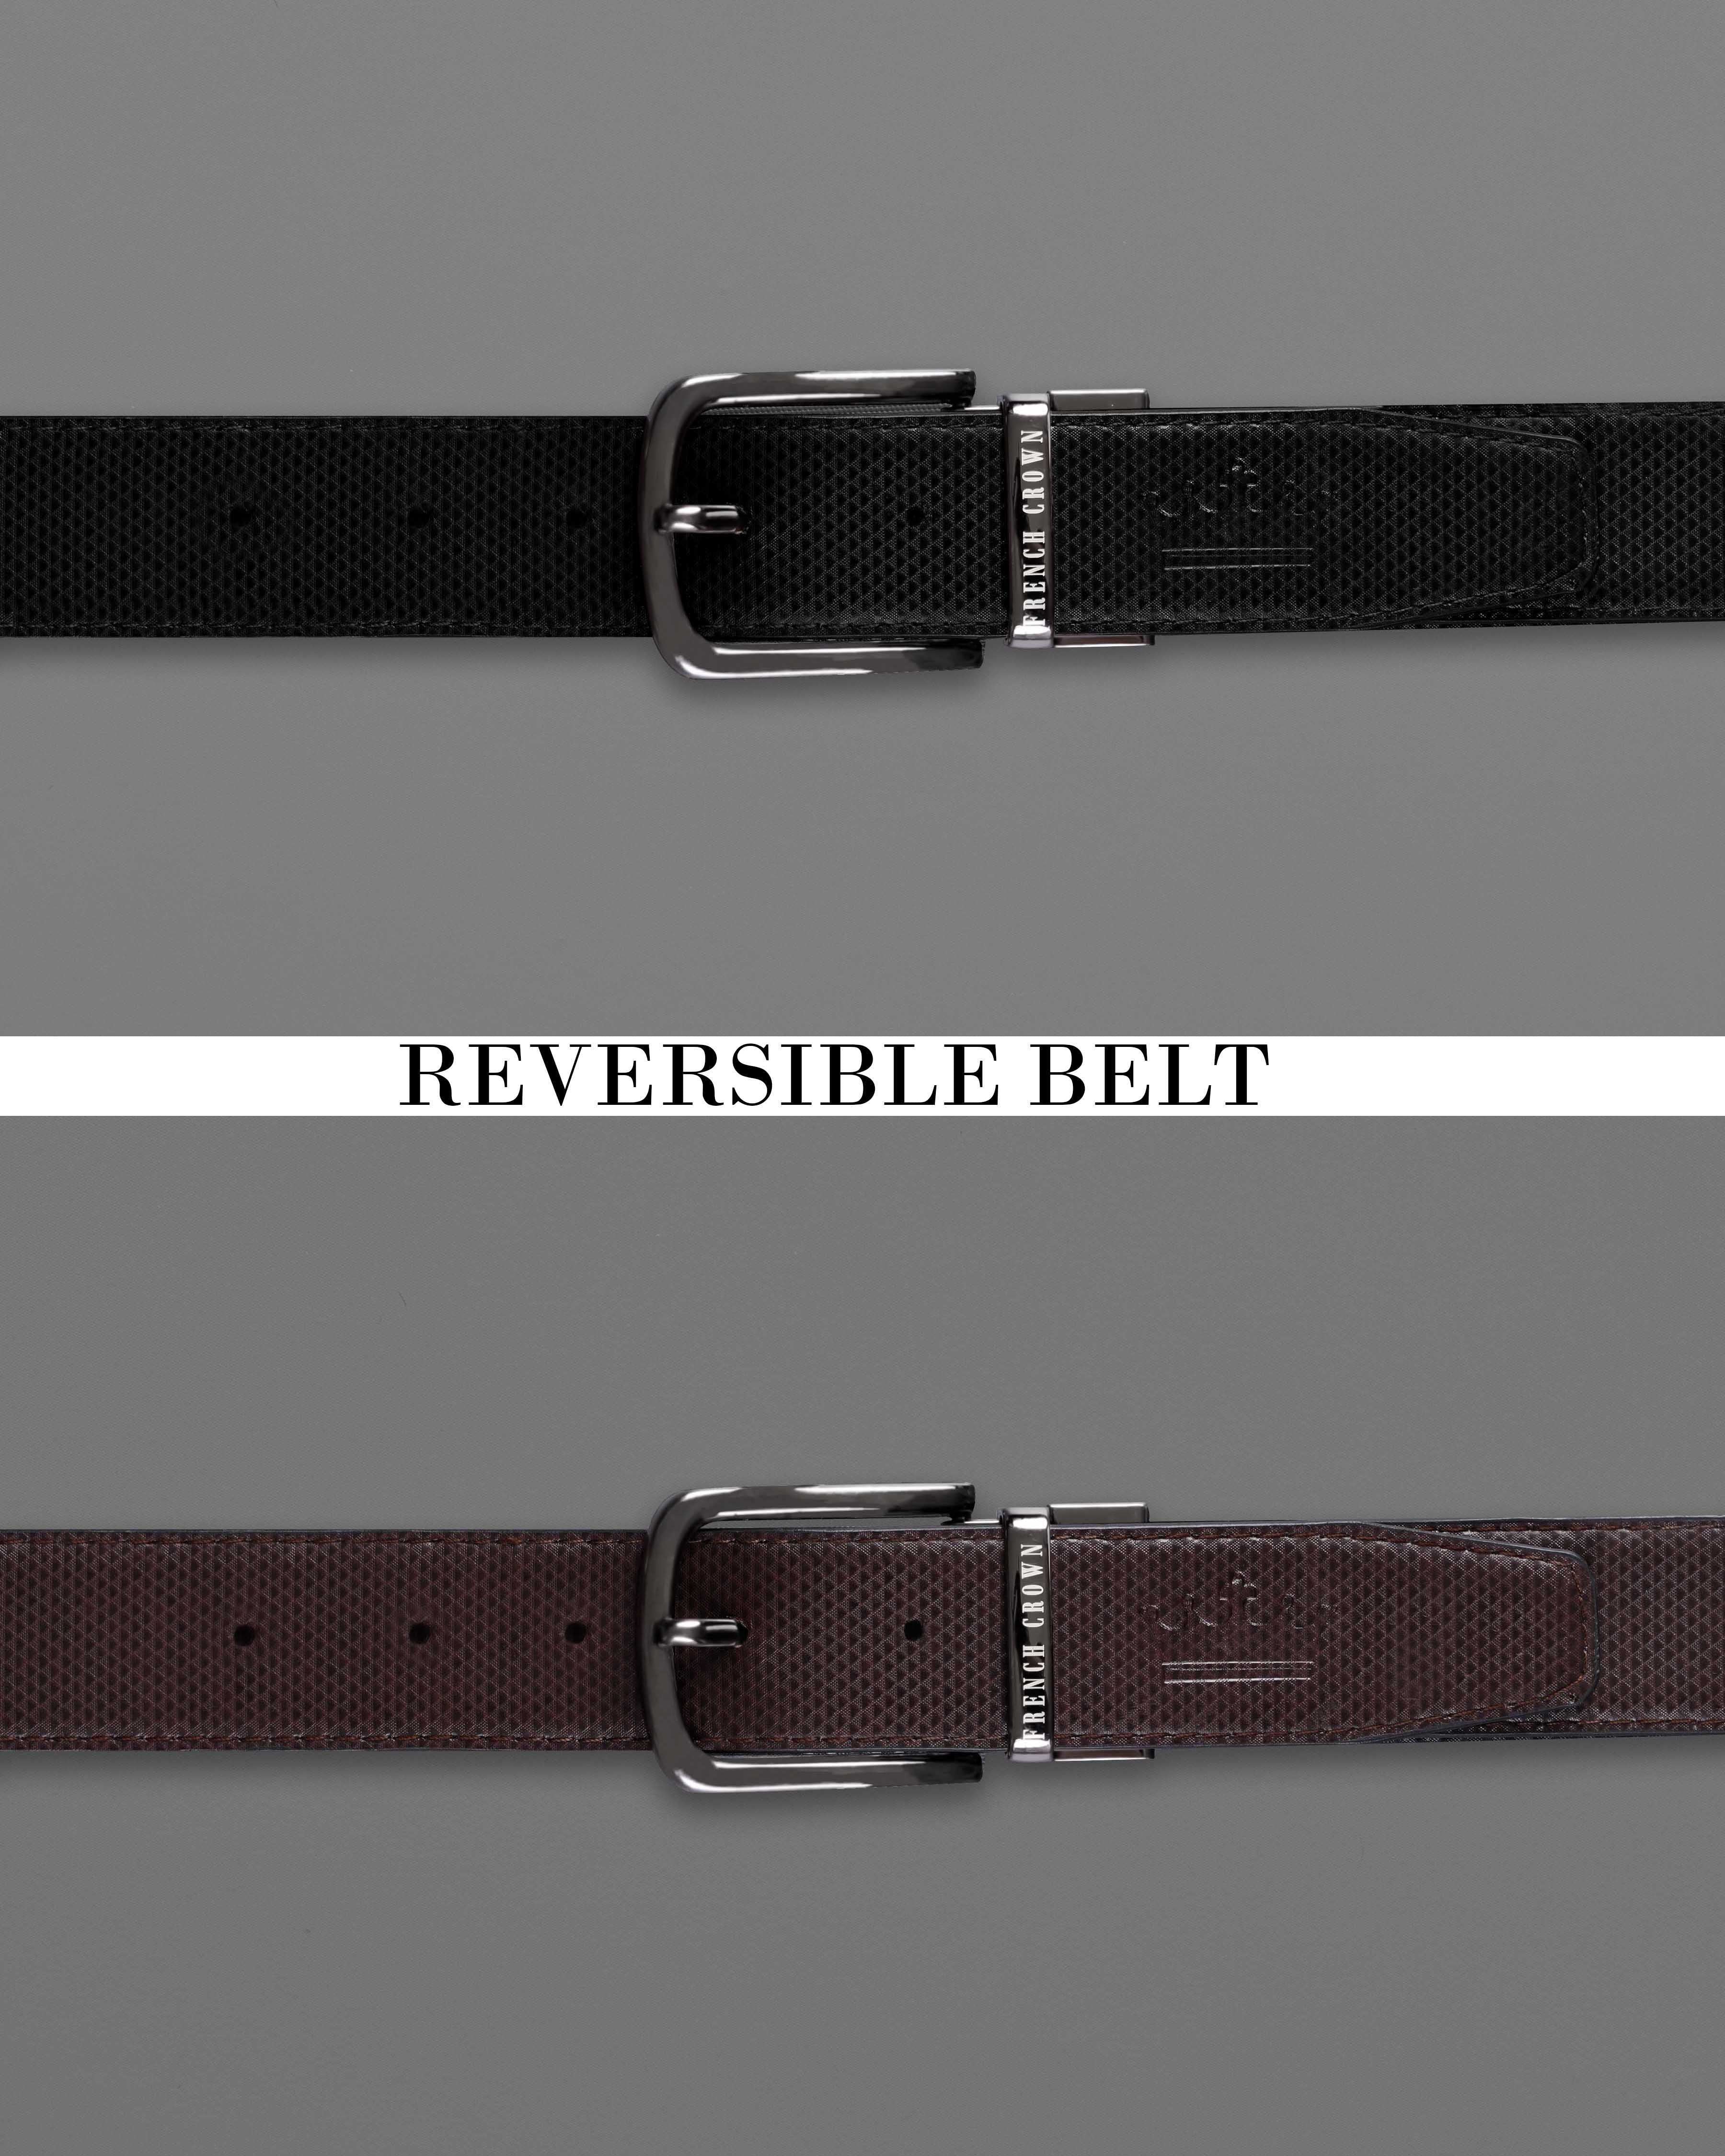 Metallic Black Buckle with Jade Black and Brown Leather Free Handcrafted Reversible Belt BT082-28, BT082-30, BT082-32, BT082-34, BT082-36, BT082-38